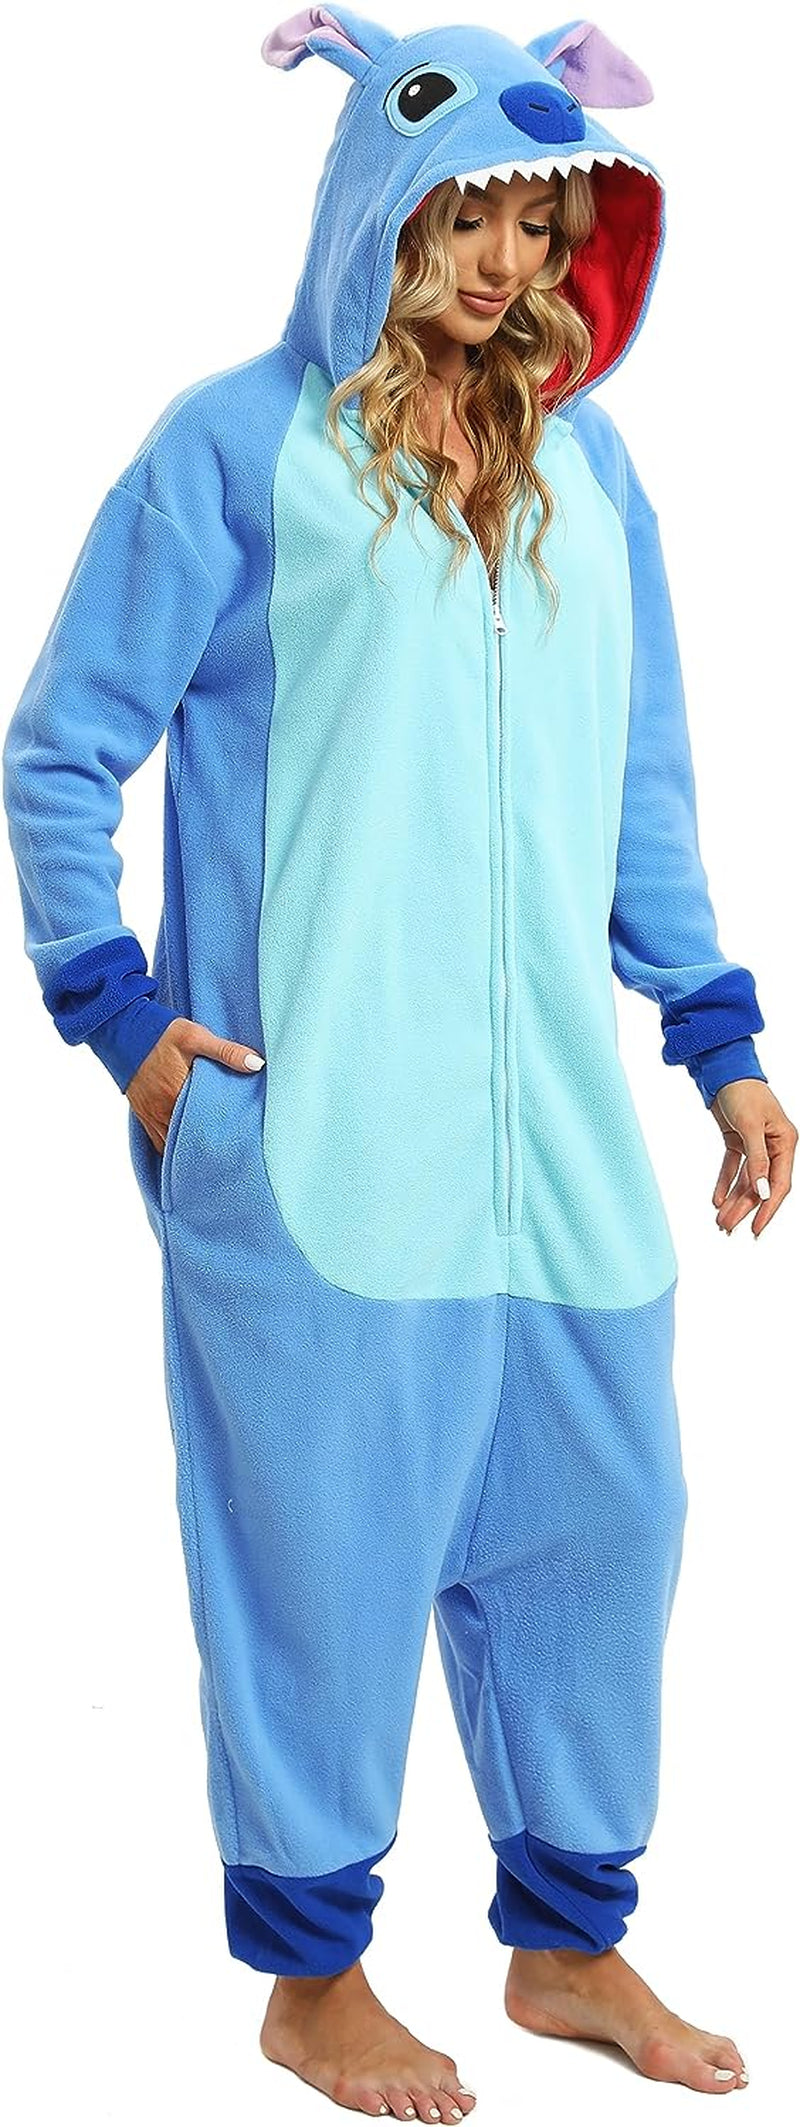 Wishliker Unisex Adult Cow Onesie Costume Halloween Cosplay Animal Pajamas One Piece  Wishliker Zipper Blue Stitch Large 